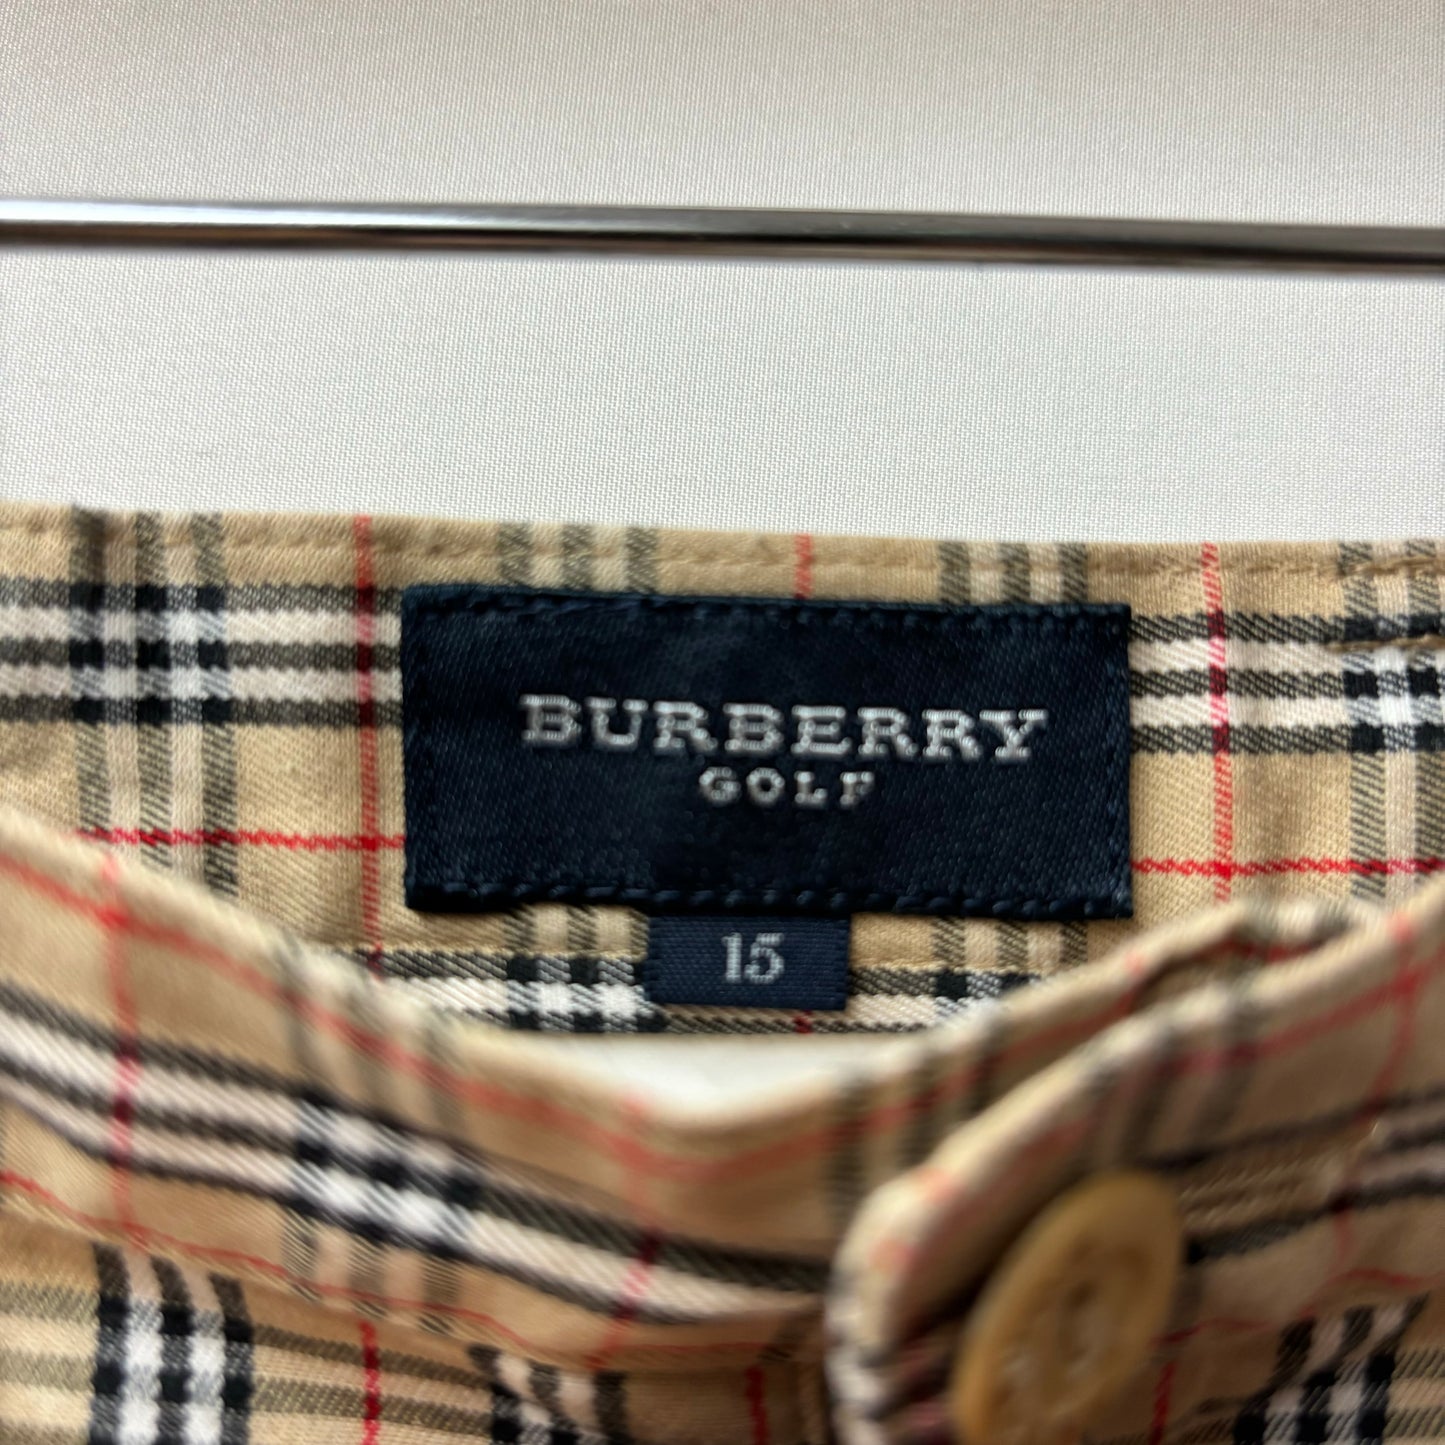 burberry golf pants